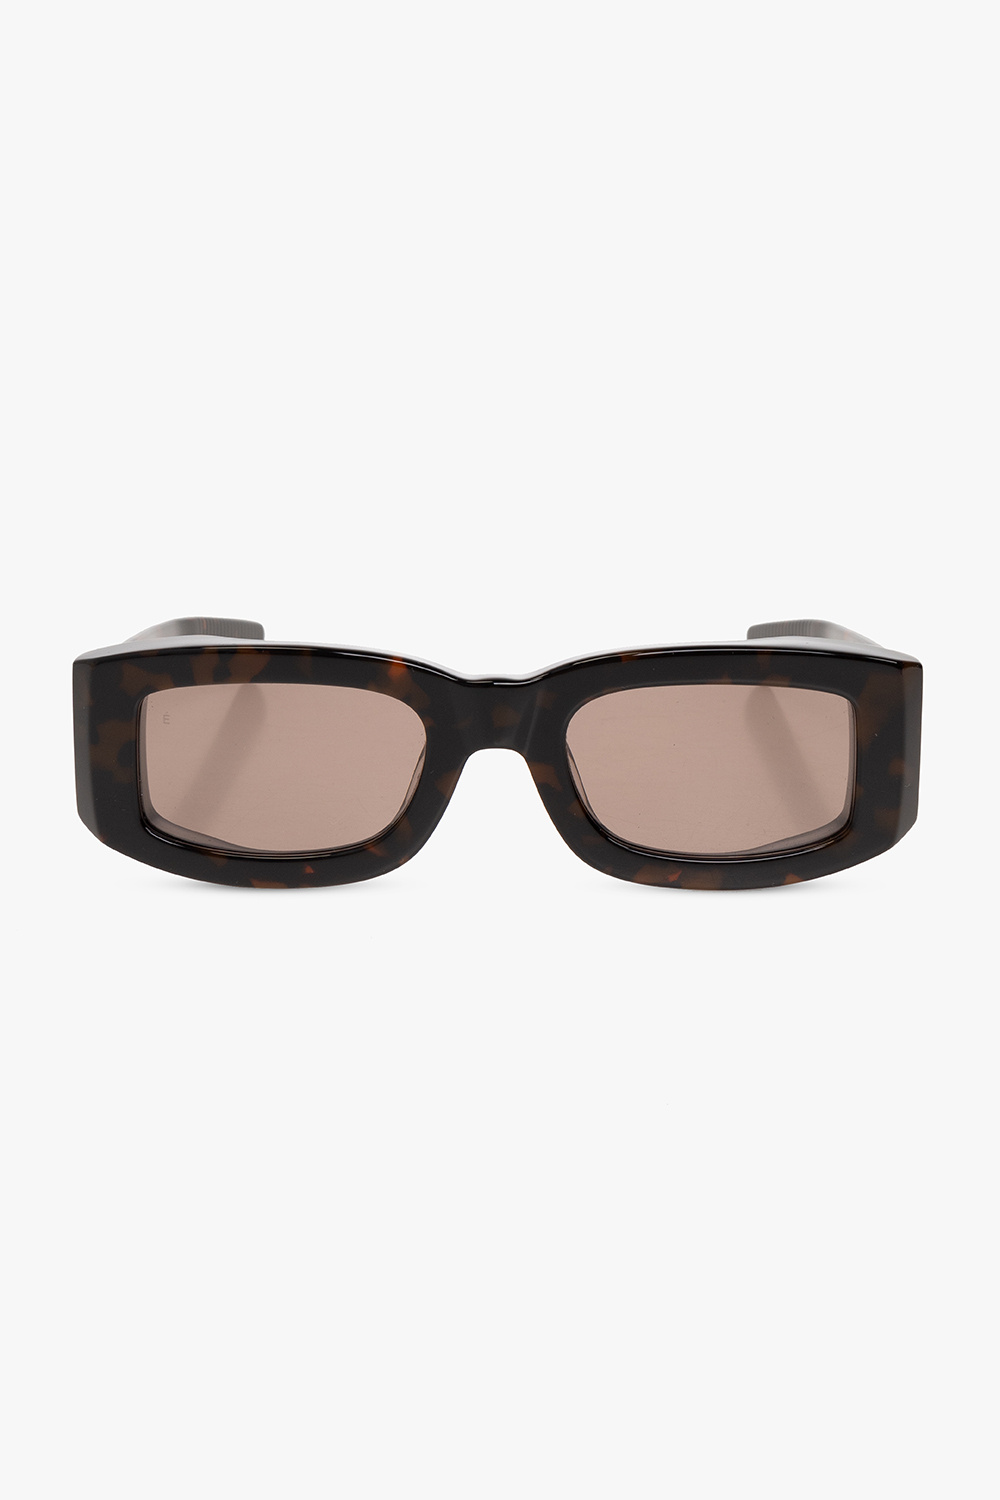 Etudes ‘Correspondance’ sunglasses